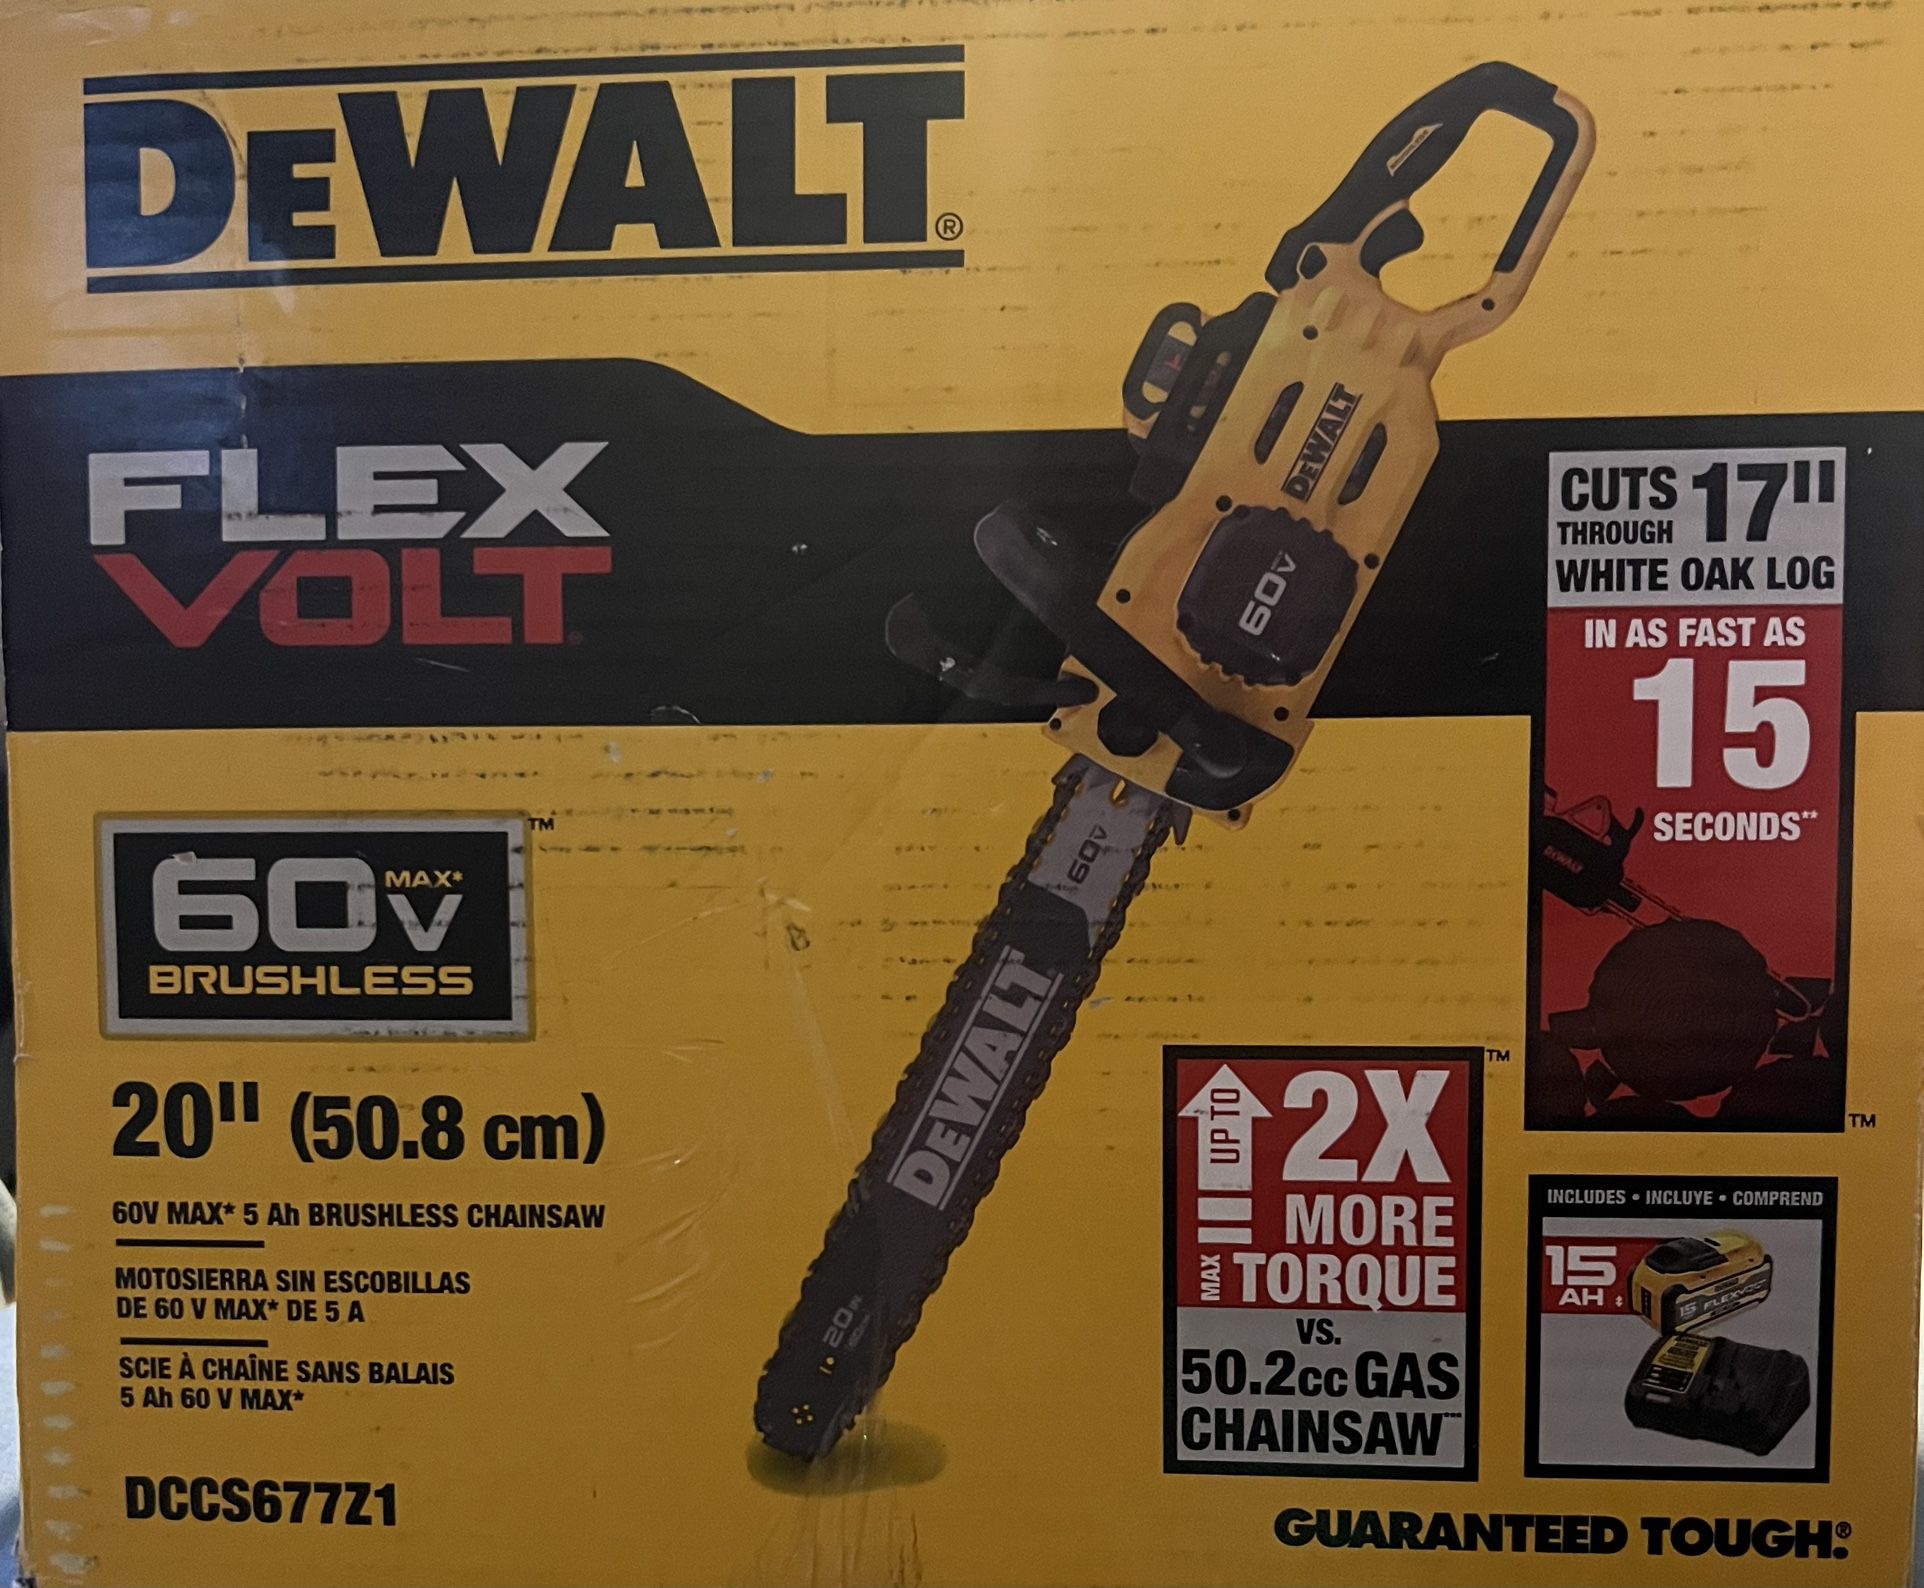 Dewalt 20” 60v Chainsaw W/ 9.0 Flex Volt Battery